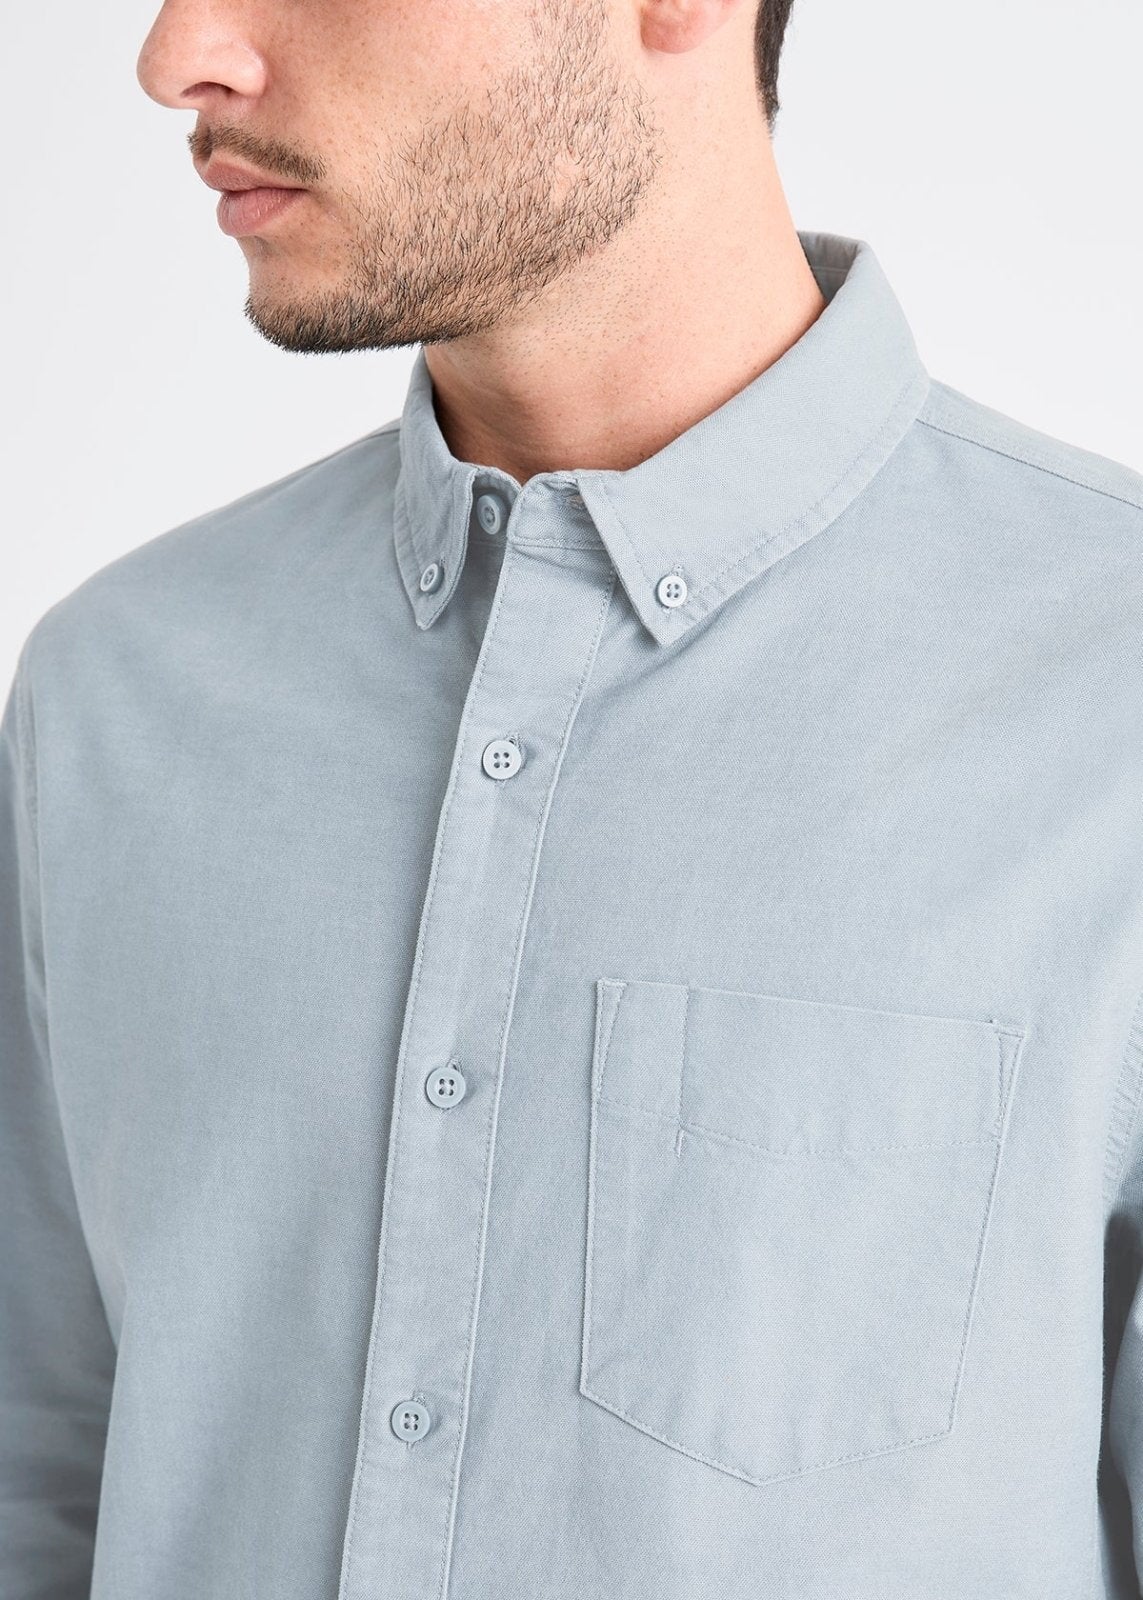 mens light blue stretch button down shirt chest pocket detail